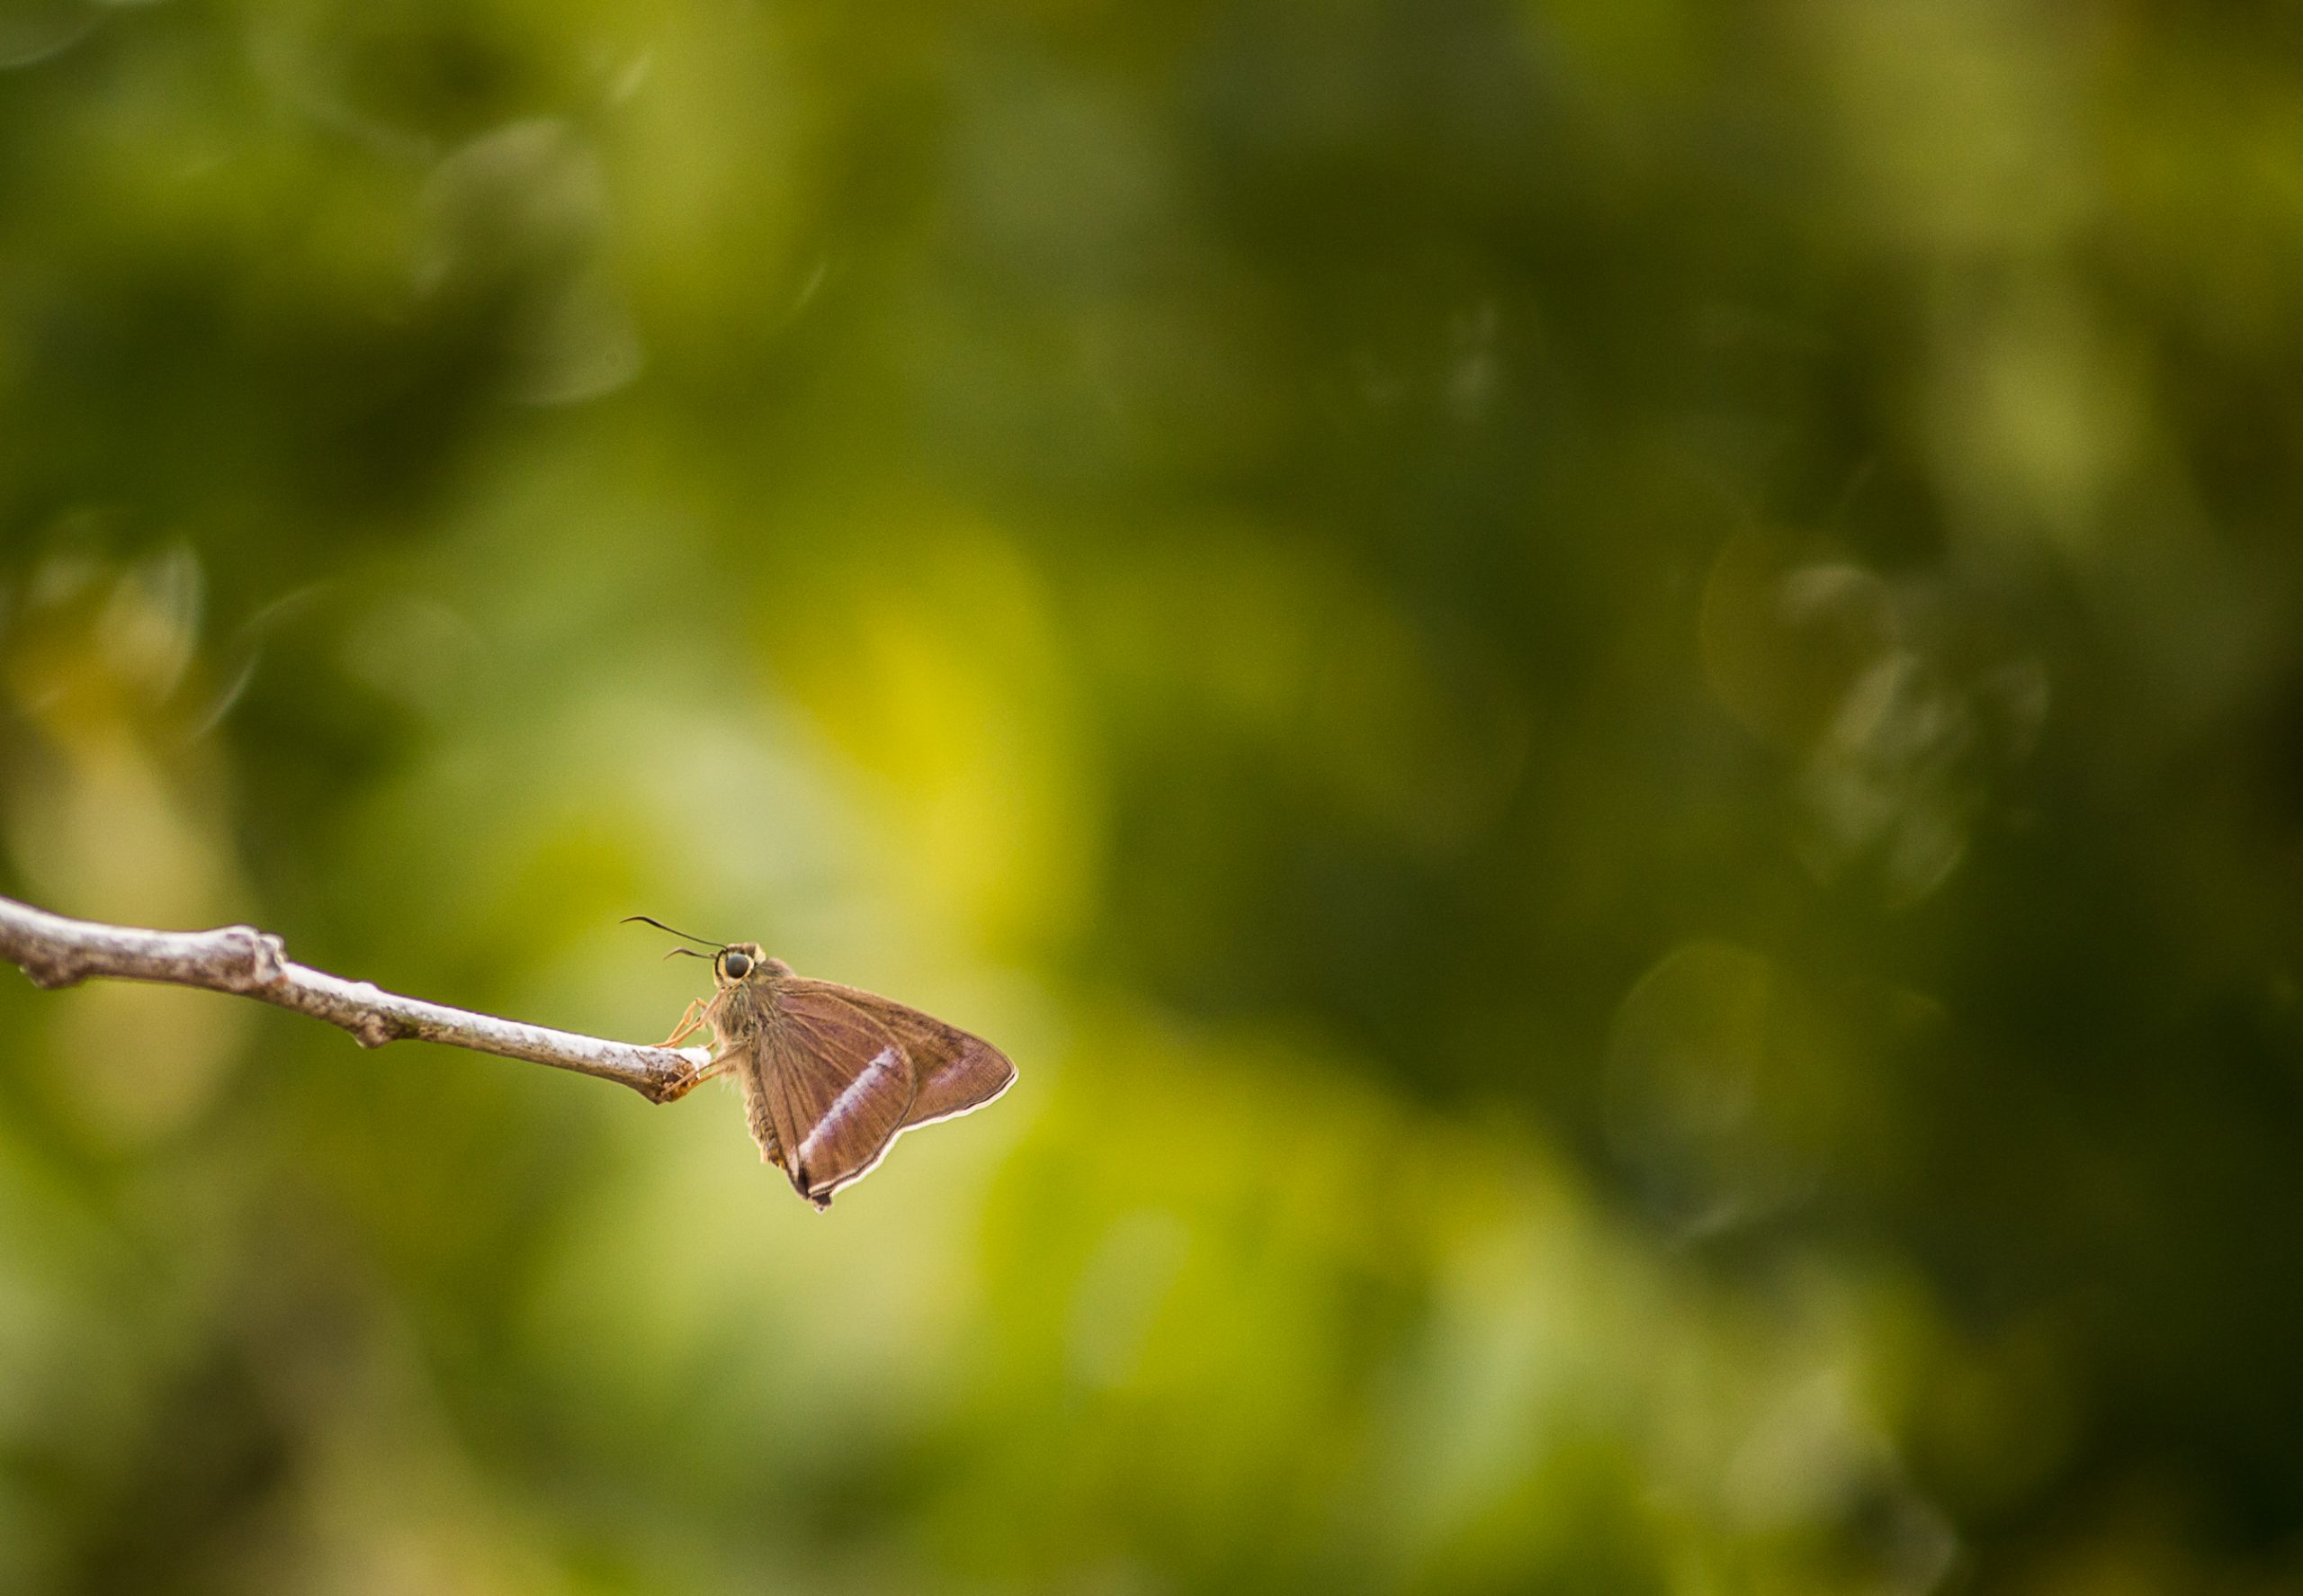 Moth on twig